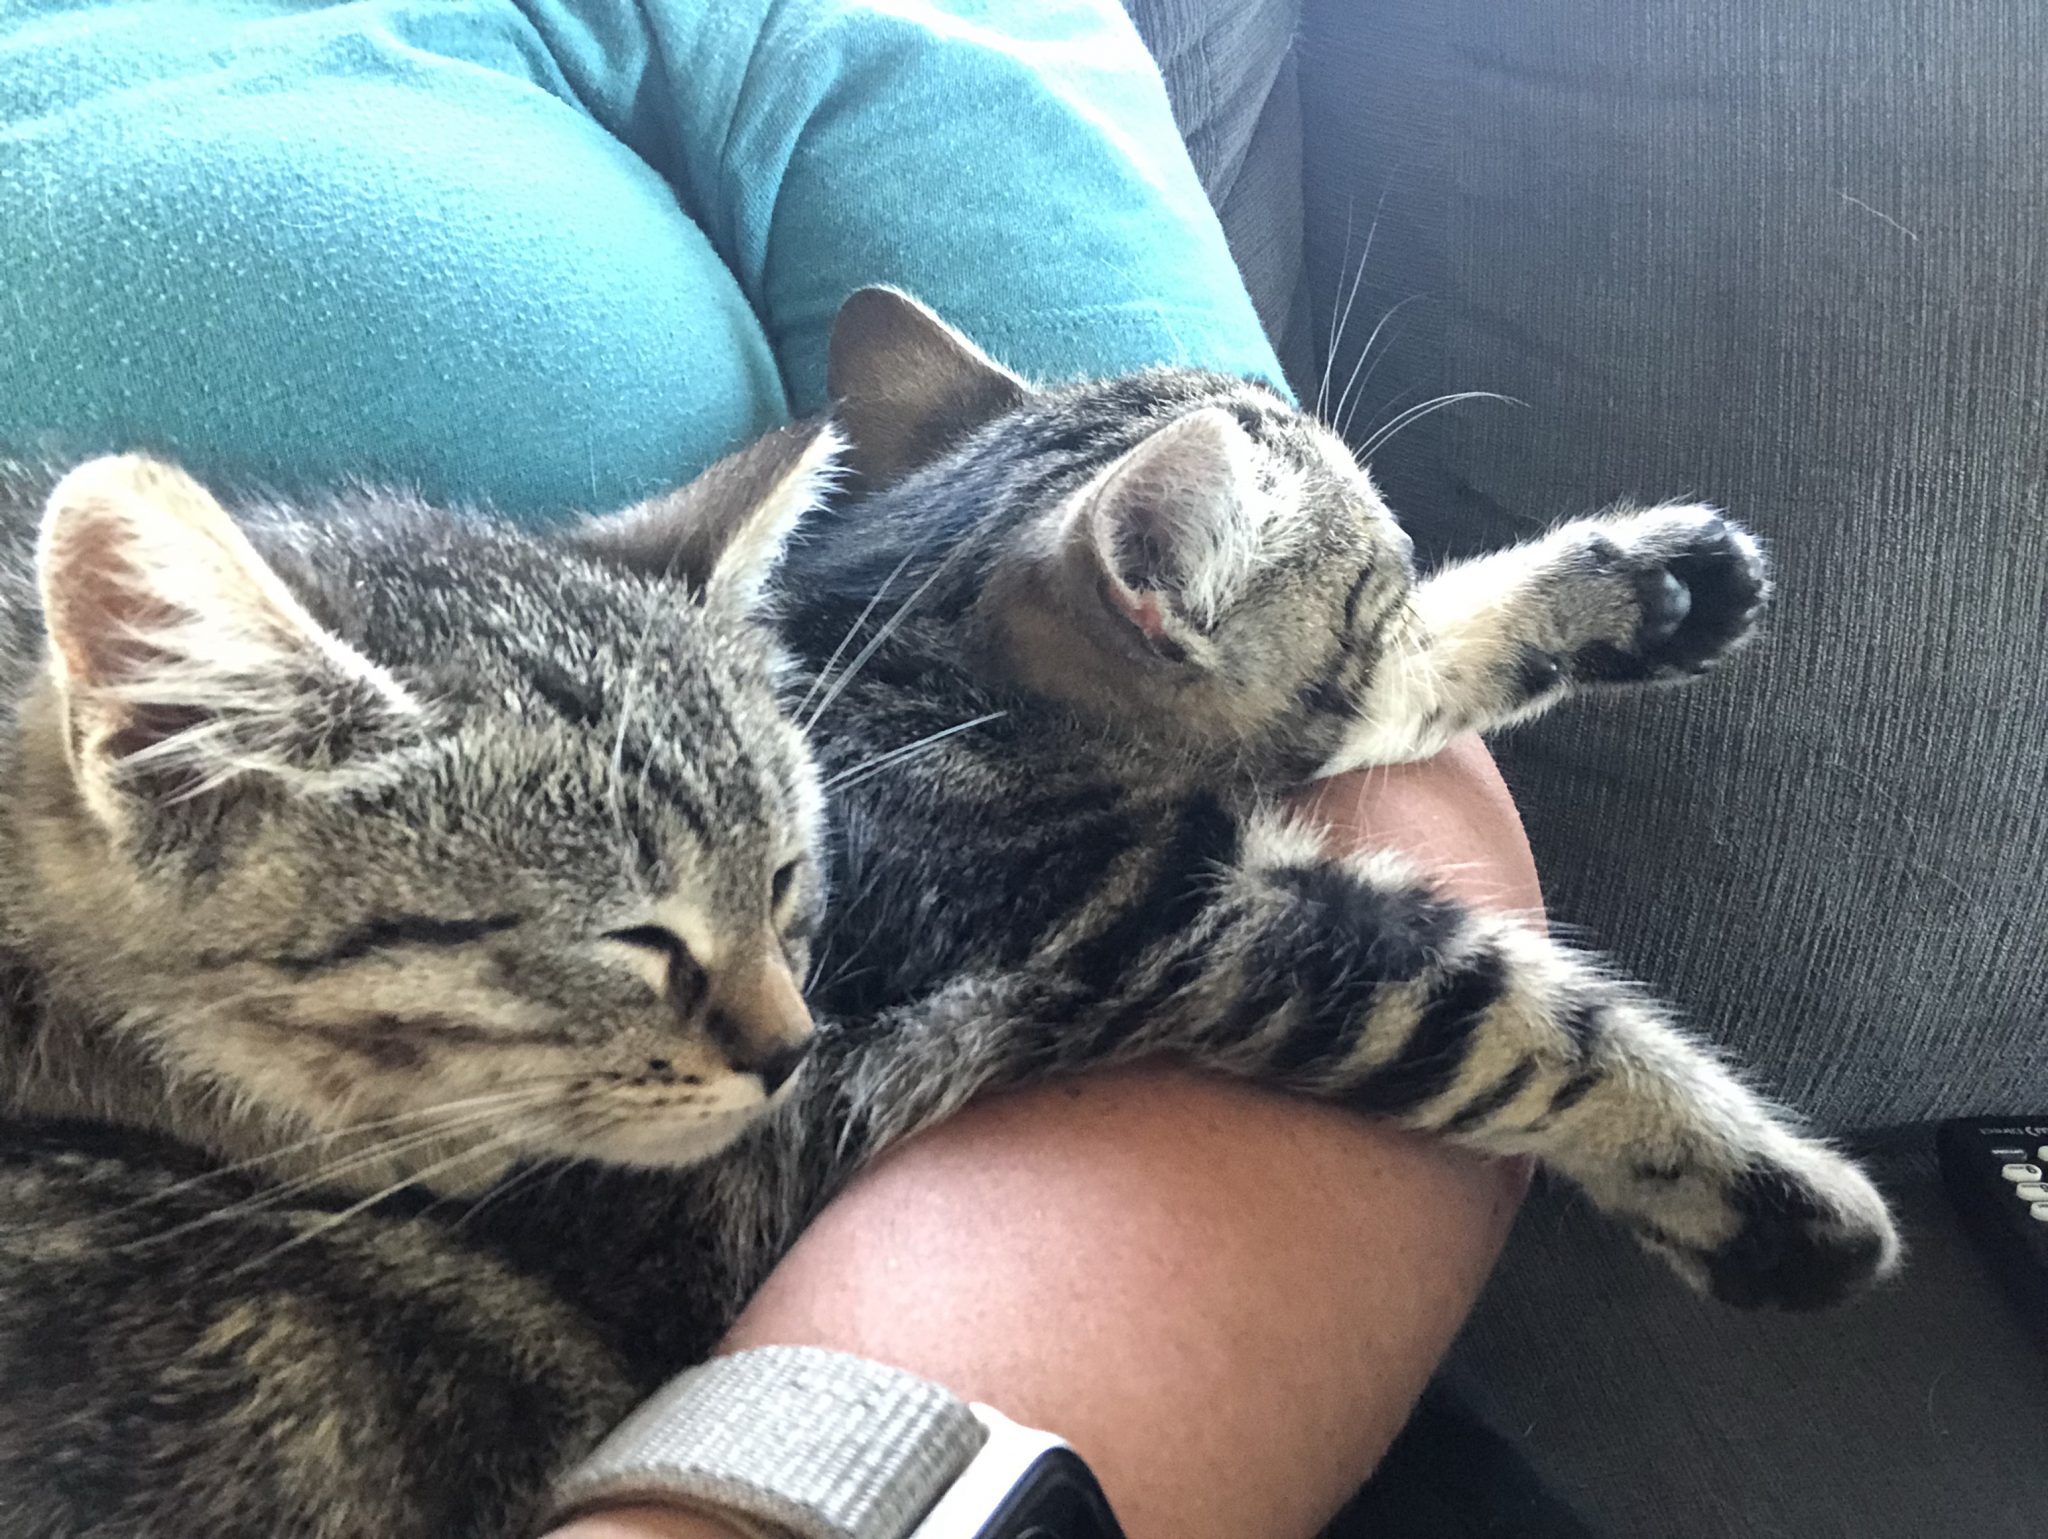 Kittens Whitecourt Homeless Animal Rescue Foundation, located in